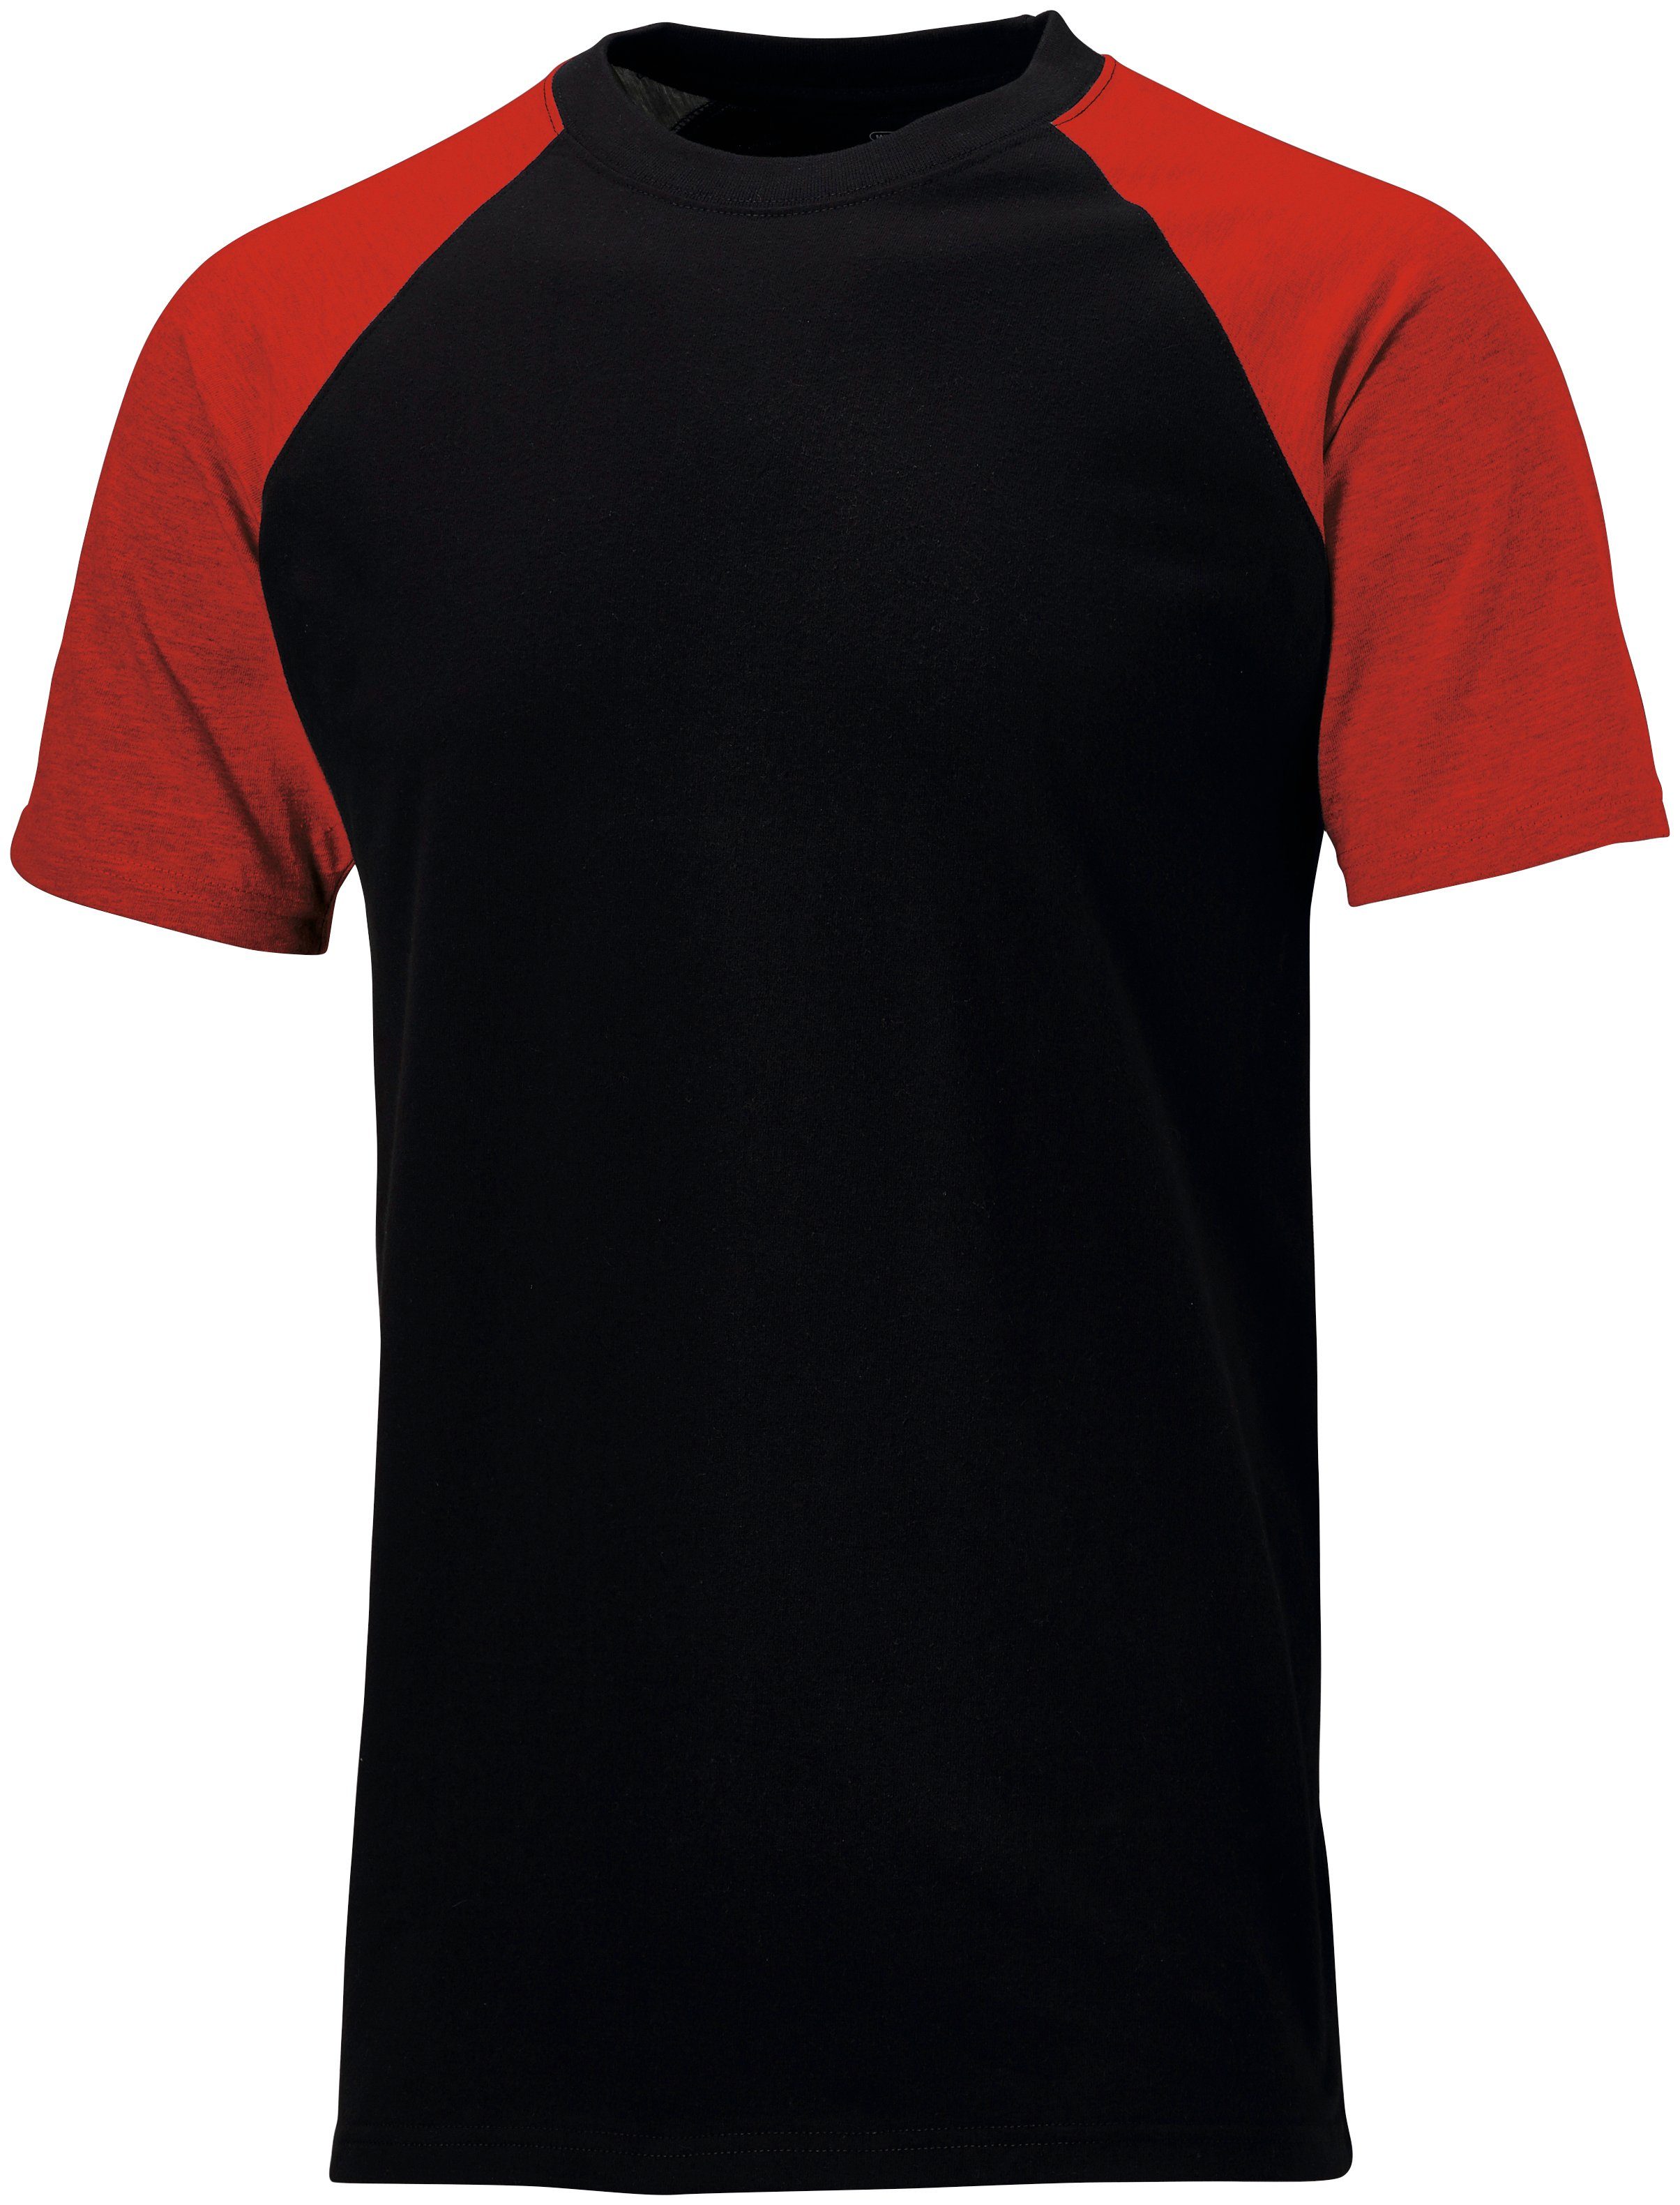 Dickies T-Shirt Gr. S - 3XL schwarz-rot | T-Shirts